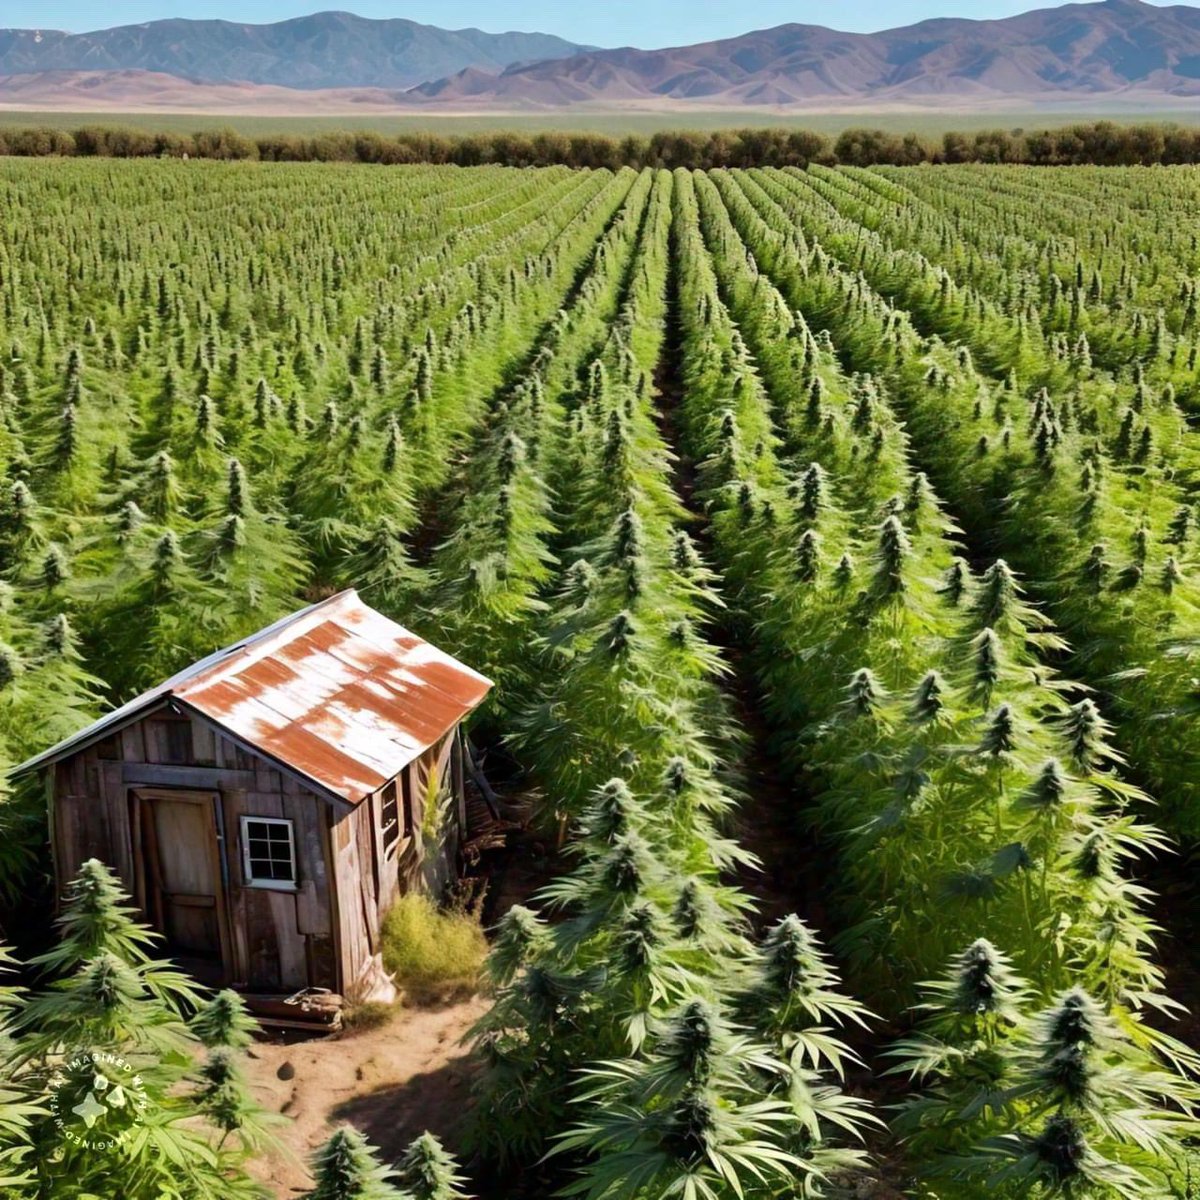 Would you live here 👀💨🤷🏼‍♂️ #cannabisfarm #cannabisgrower #cannafam